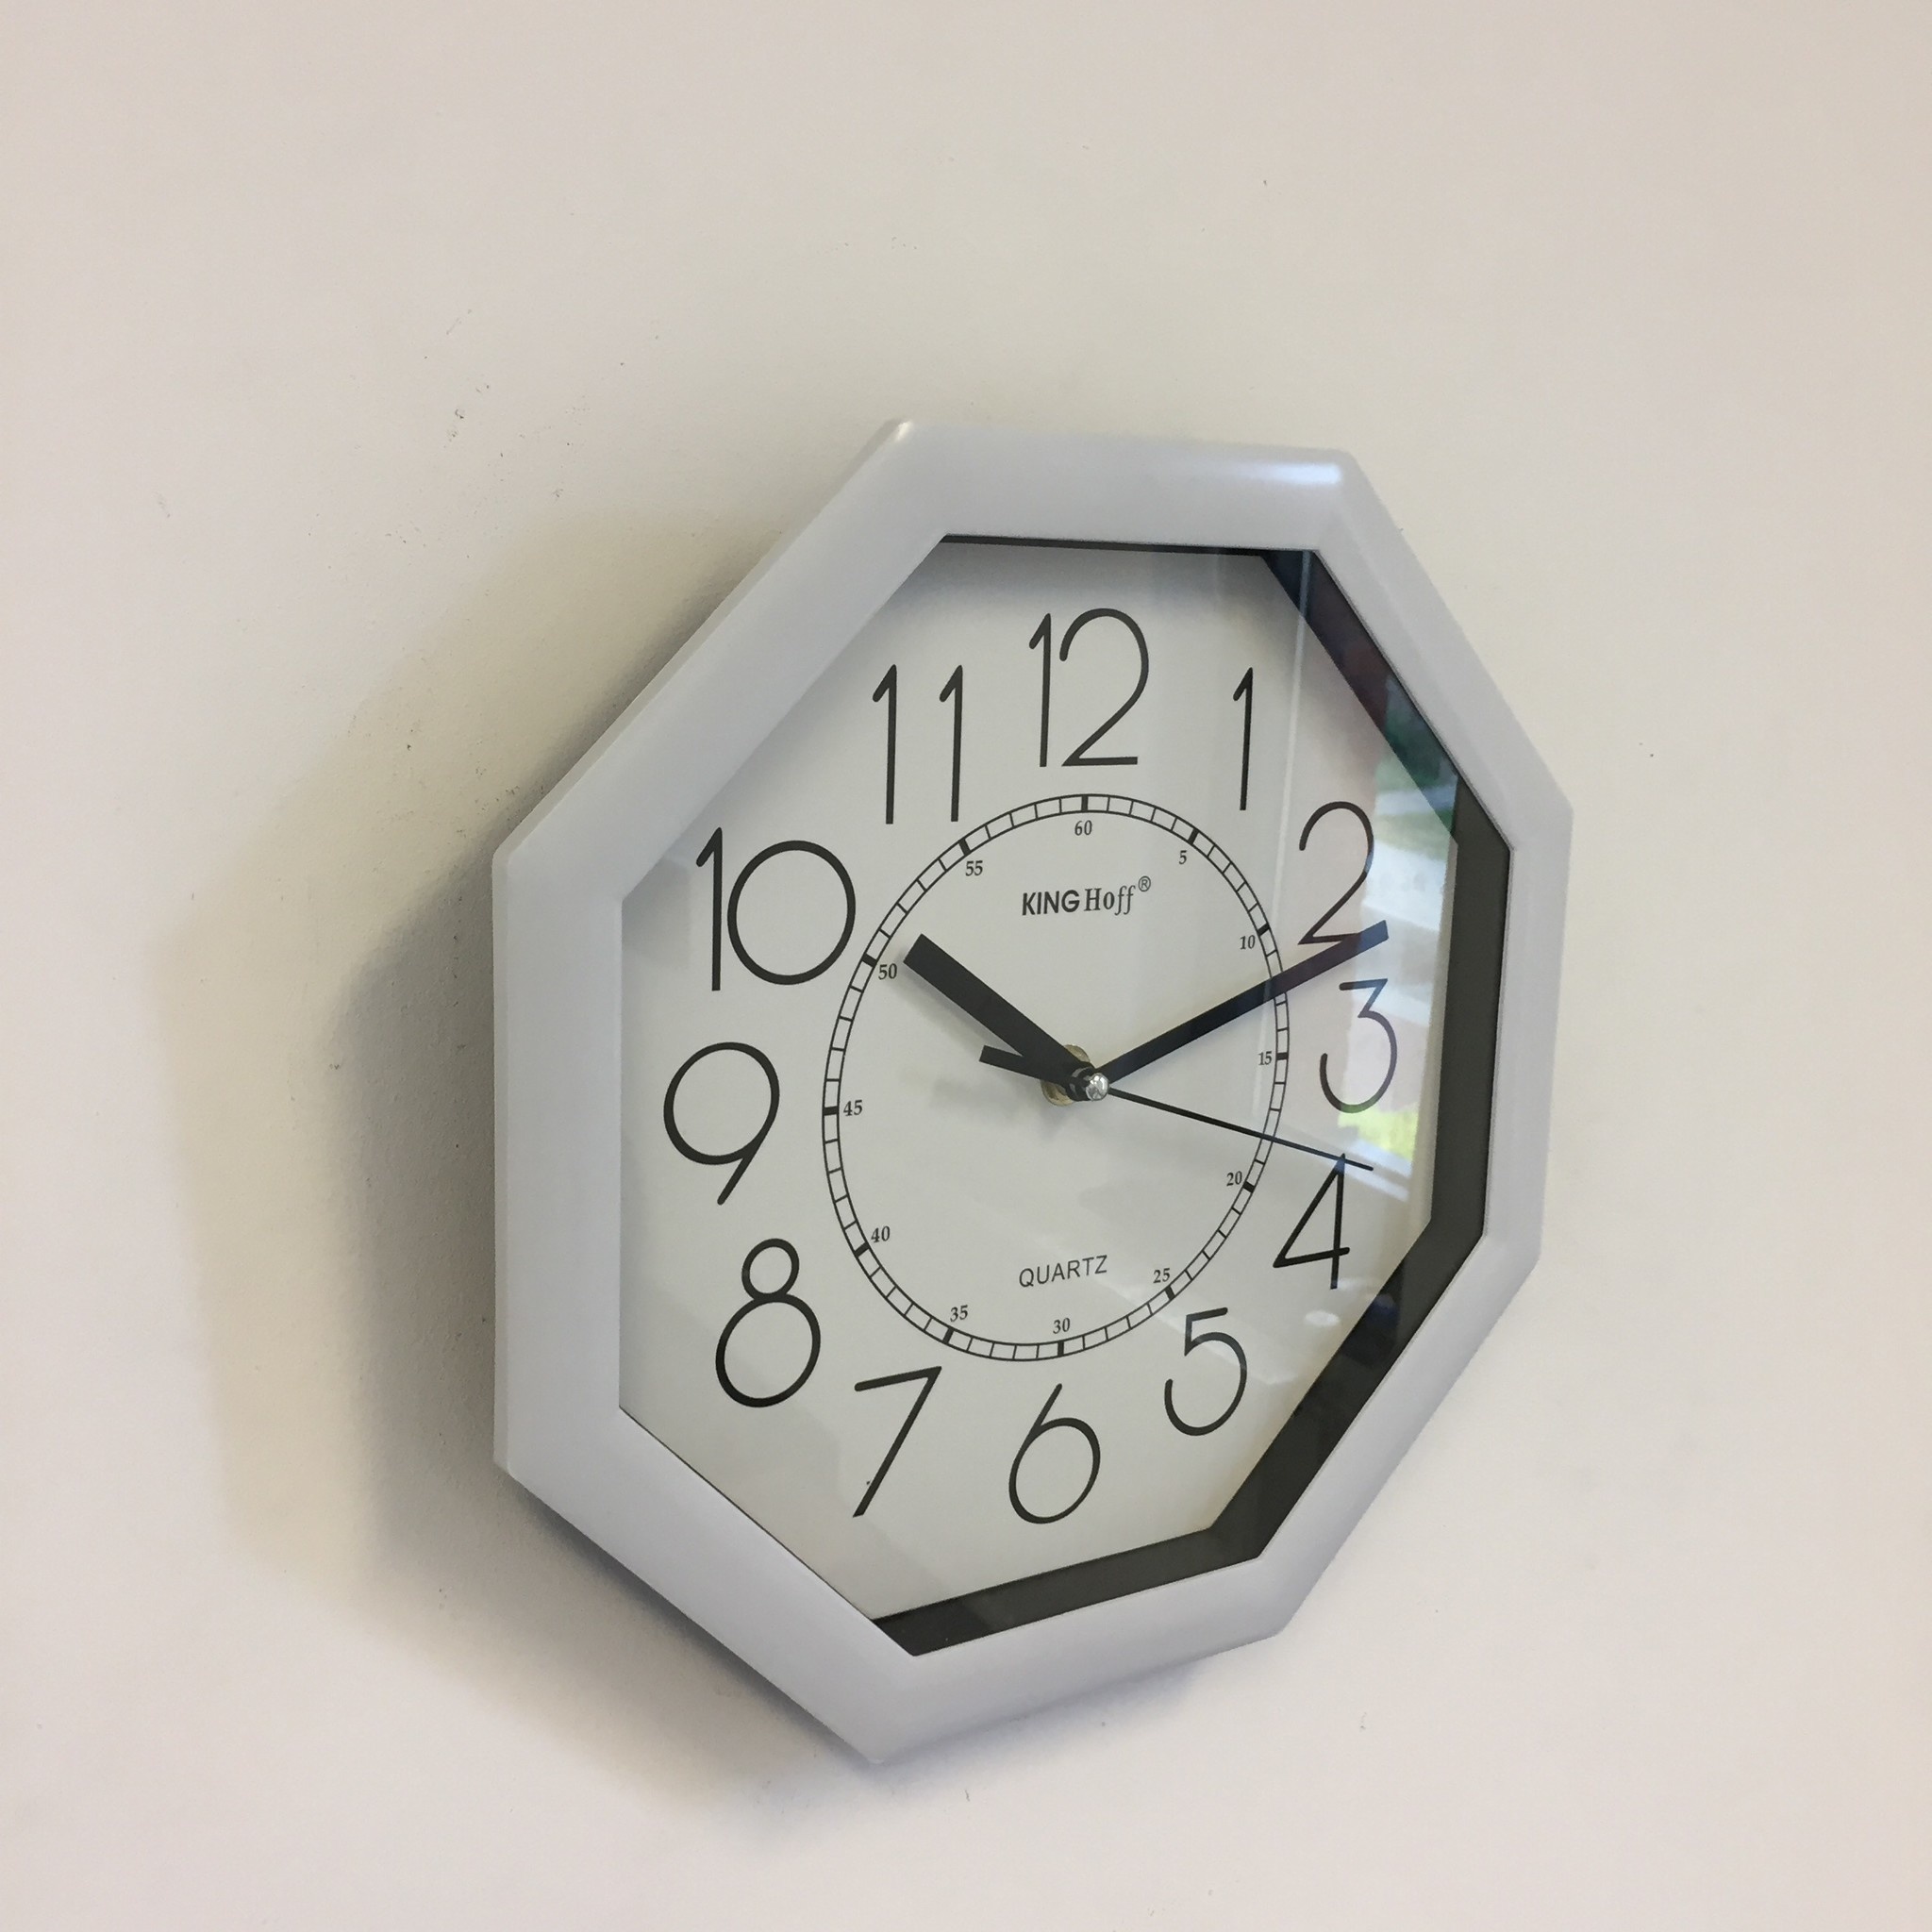 NiceTime Design - Wall clock Moby Modern Design